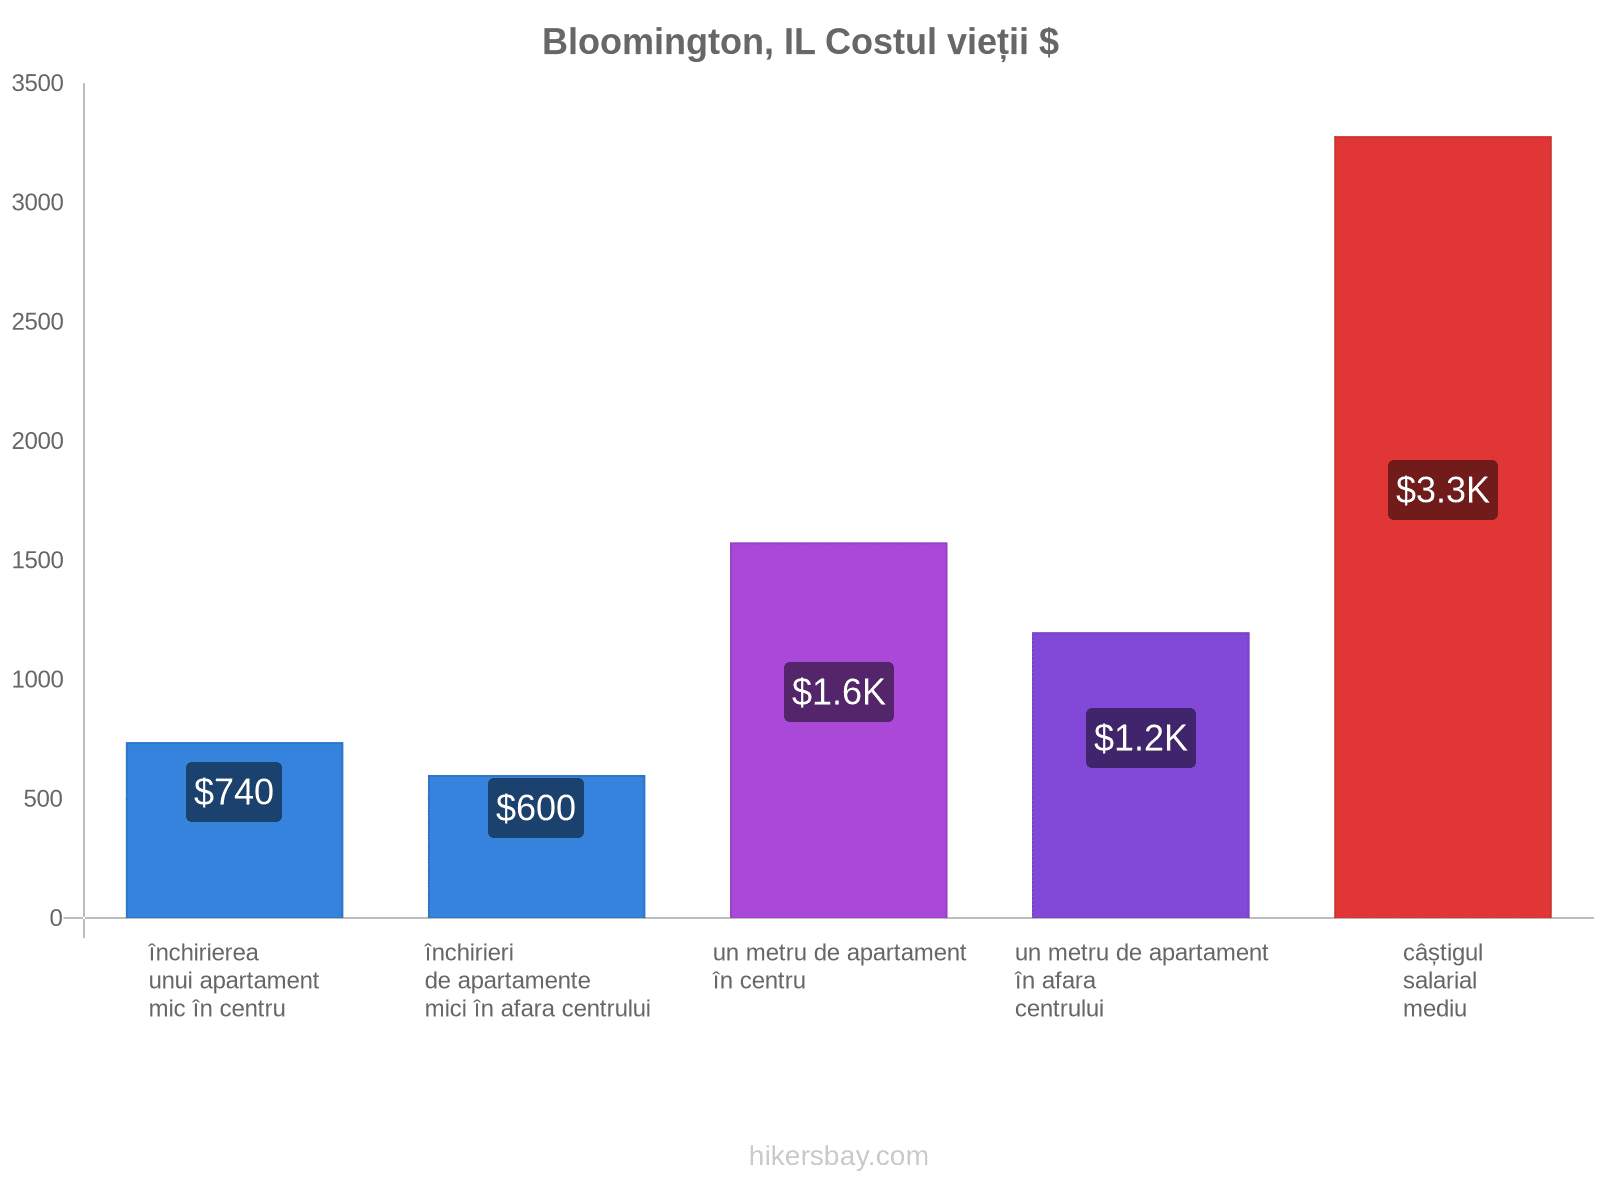 Bloomington, IL costul vieții hikersbay.com